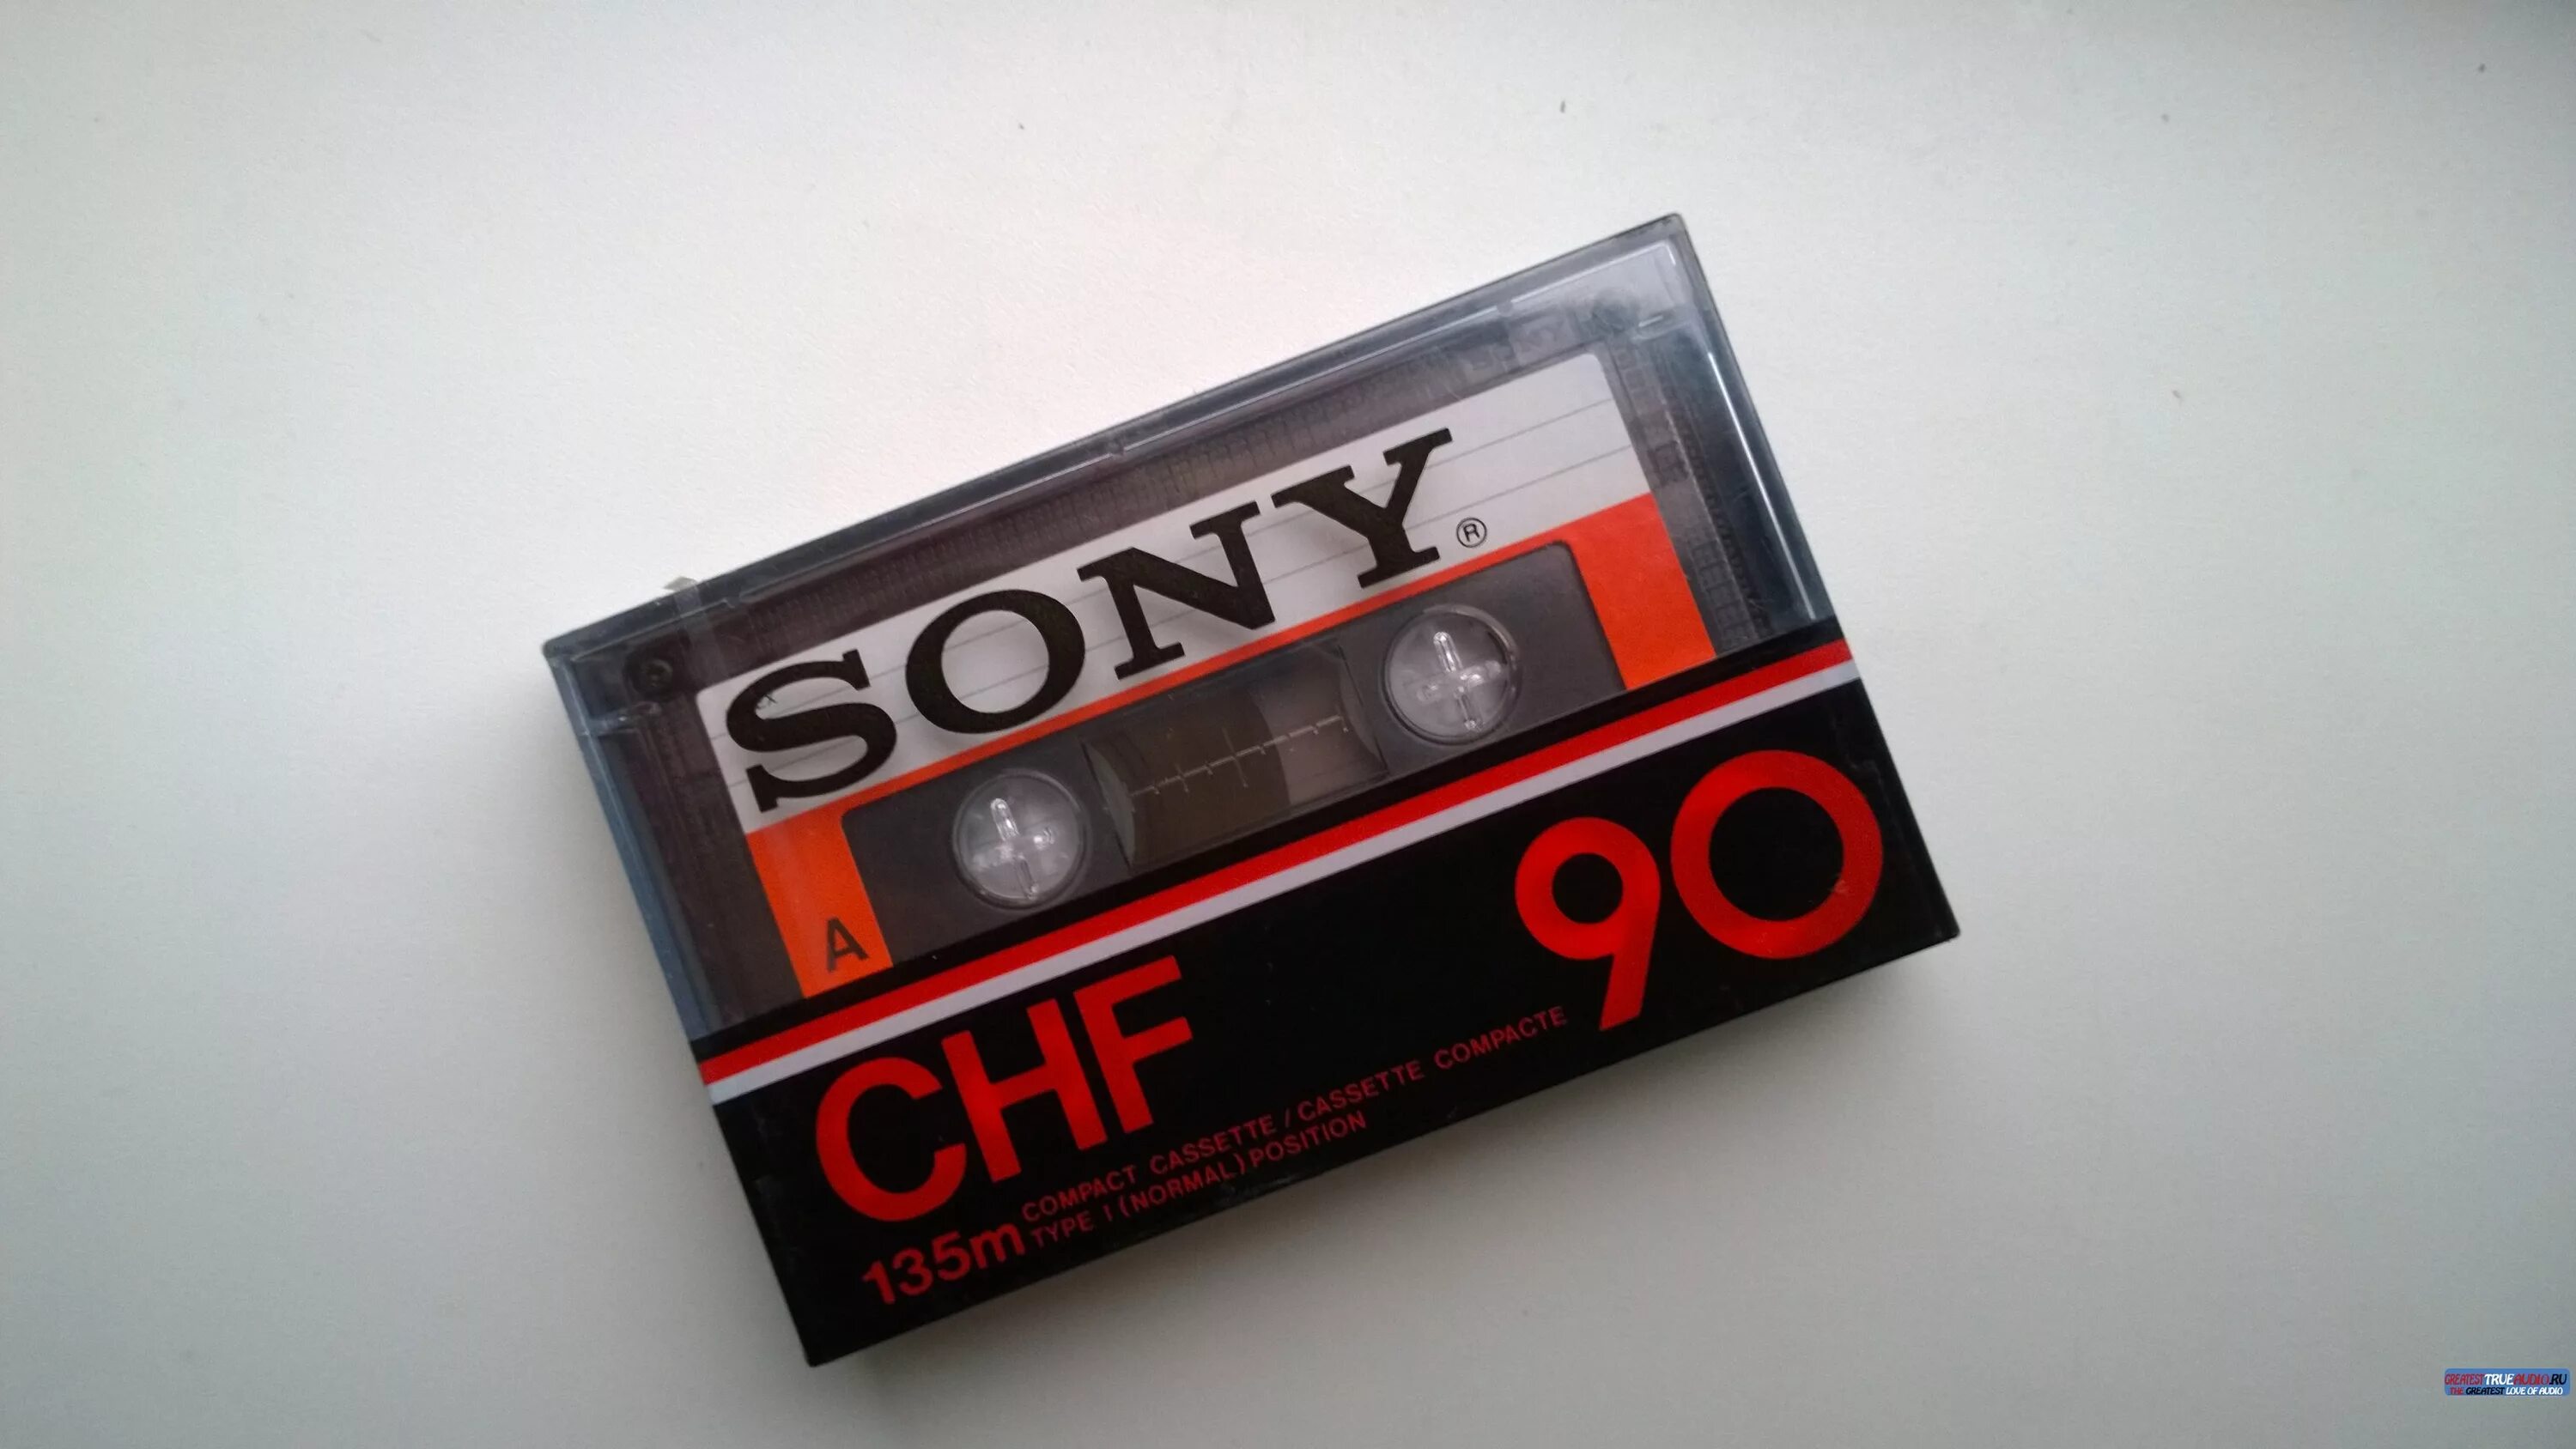 Каталог аудиокассет. Sony AHF 90 кассеты. Кассета магнитофонная сони 90. Кассета Sony CHF 90. Аудиокассета Sony AHF 1978.